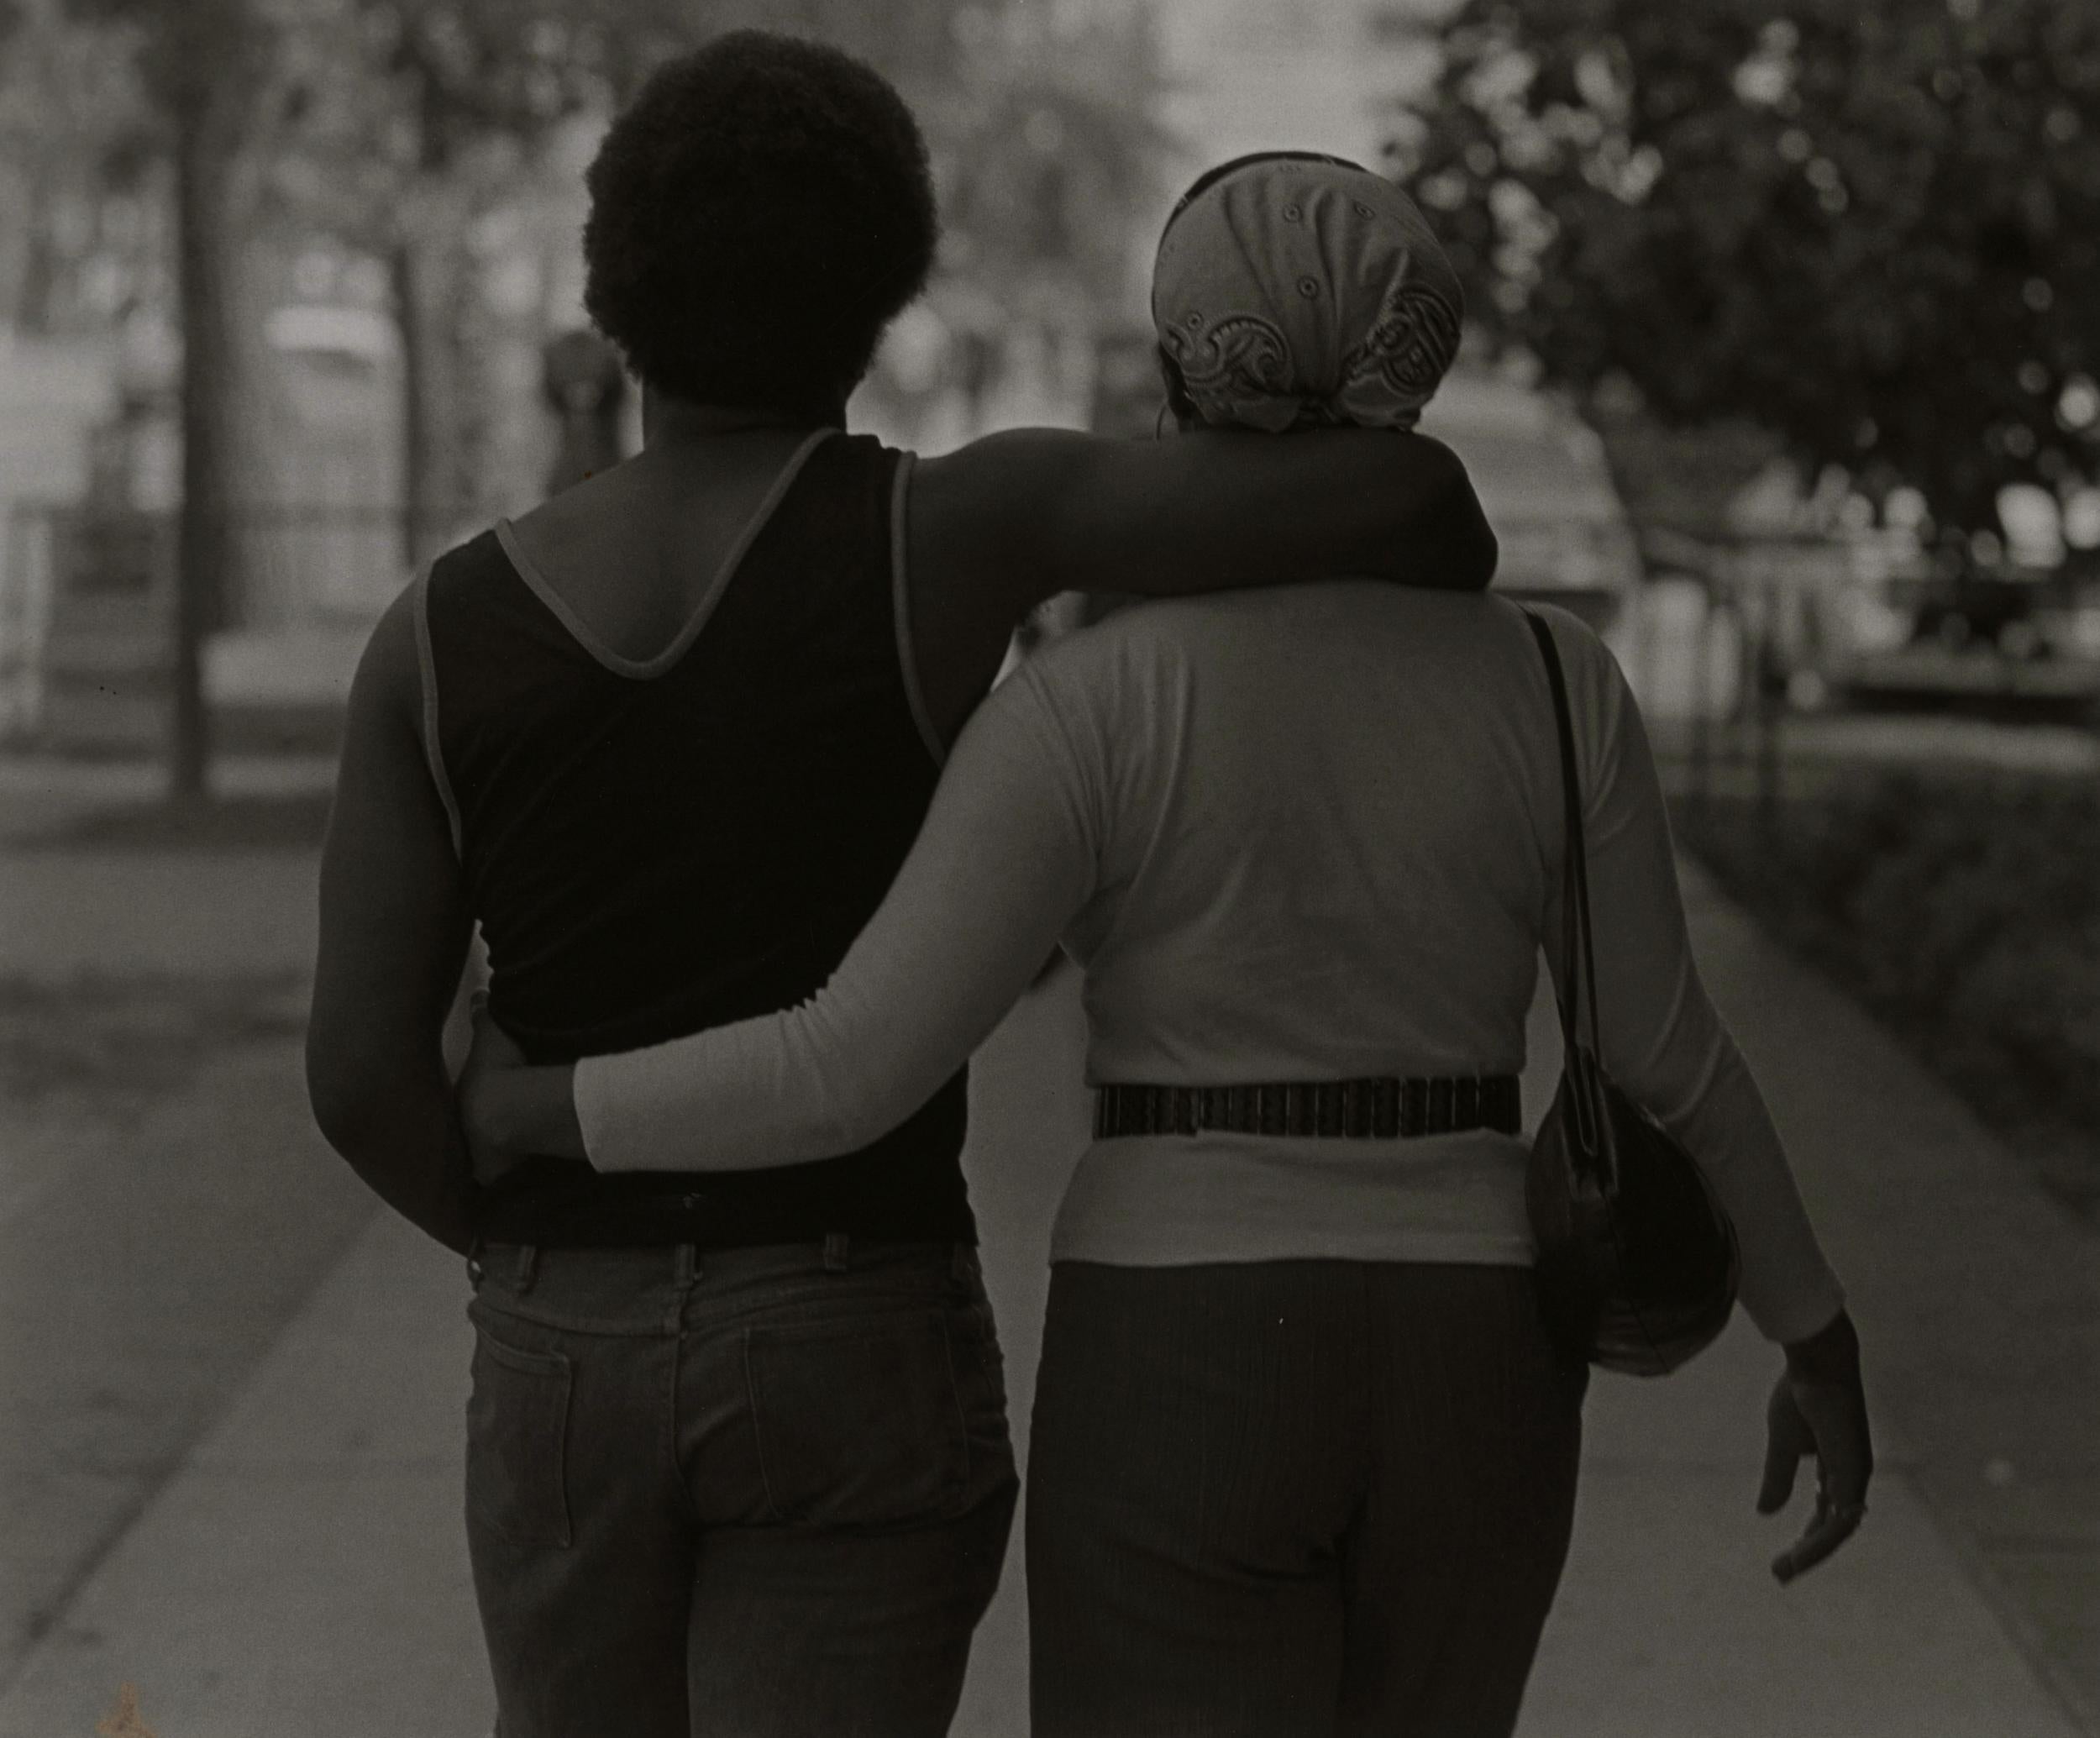 &#13;
‘Couple Walking’, 1972, Roy DeCarava &#13;